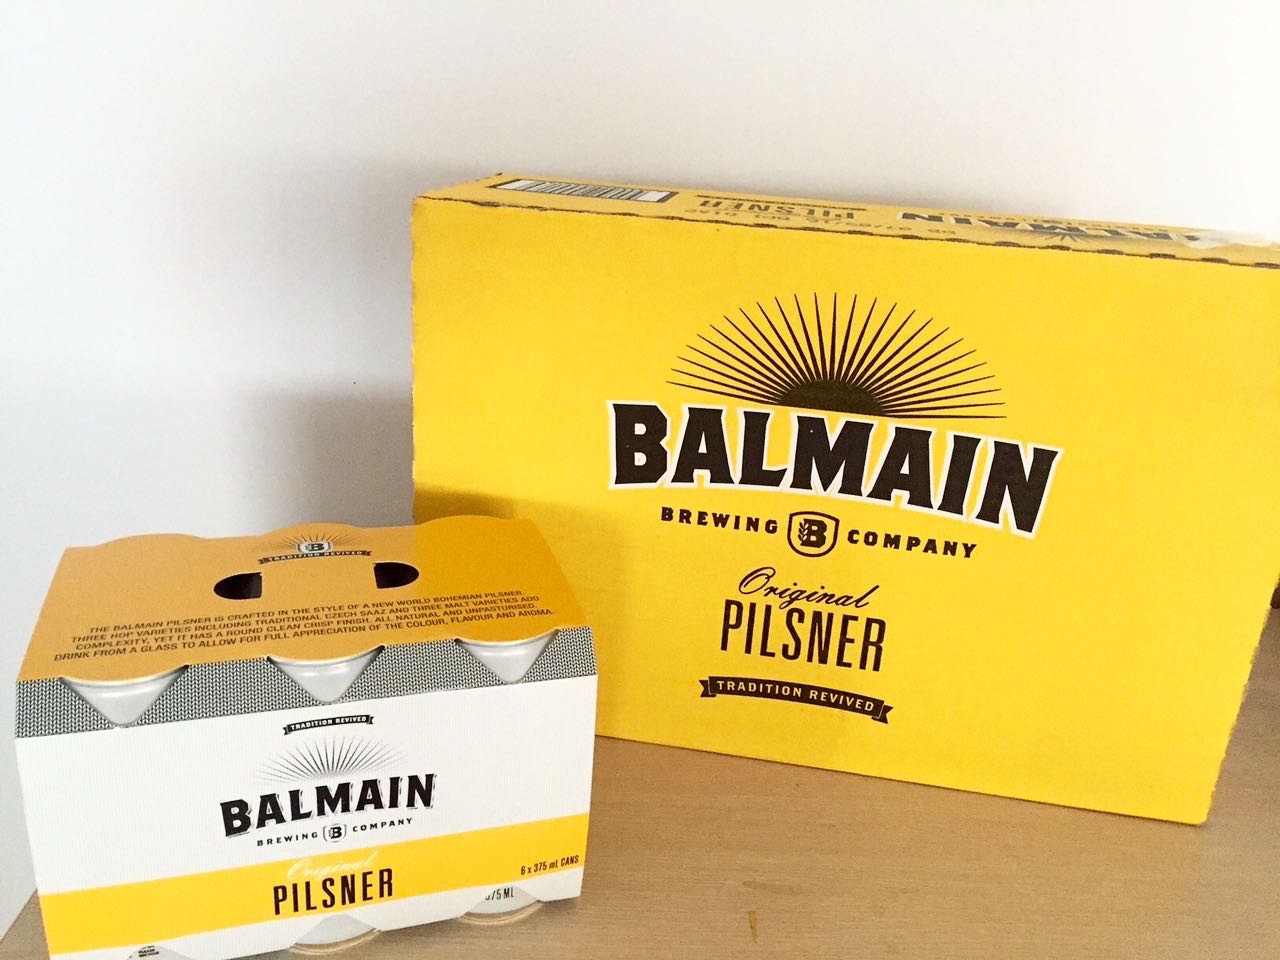 Exclusive to Aldi: Balmain Pilsner cans